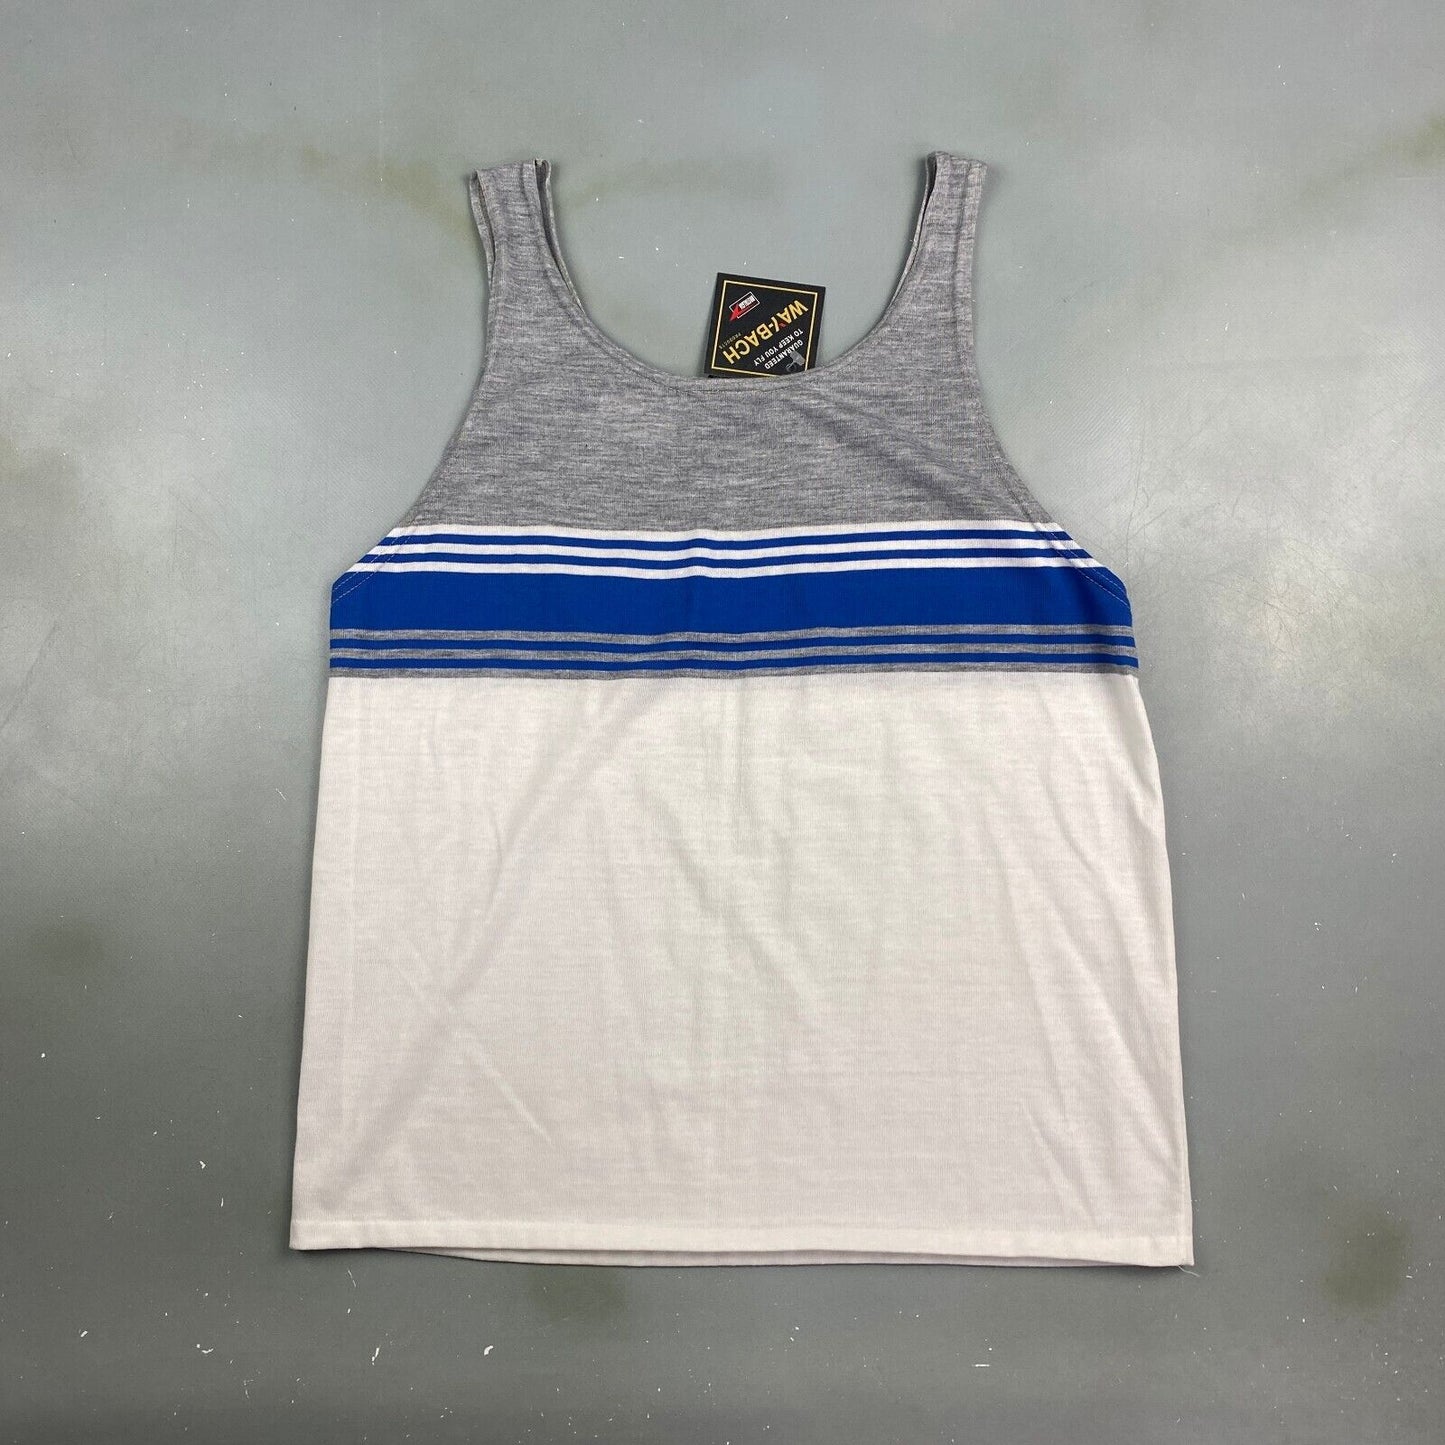 VINTAGE 80s/90s Main Sail Striped Sleeveless Tank T-Shirt sz Medium Men Adult